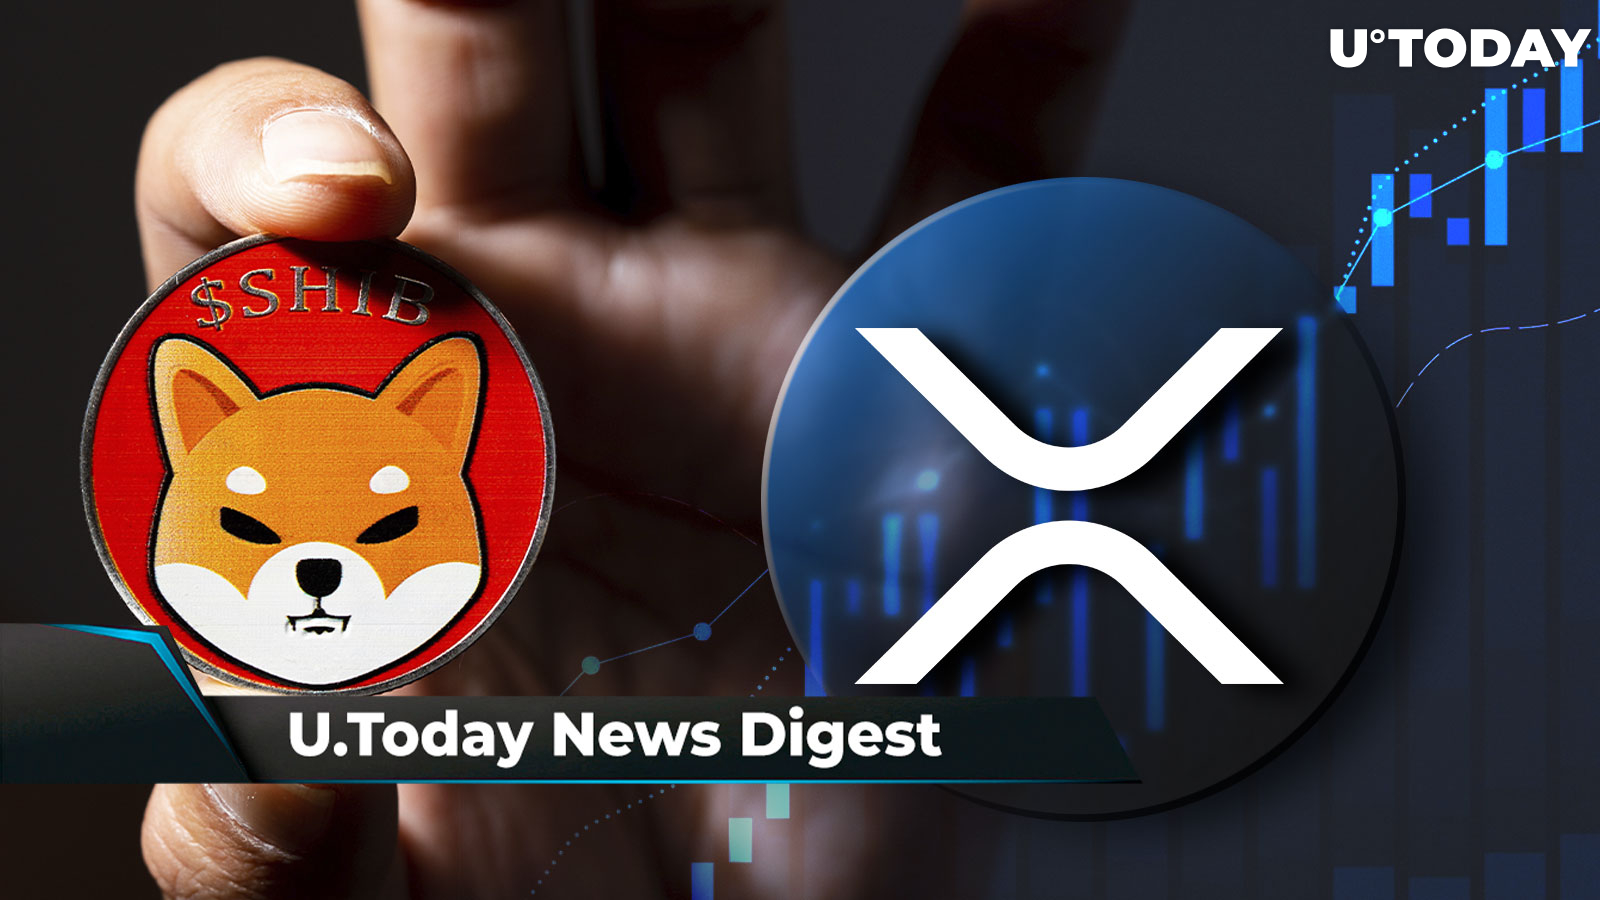 SHIB Lead Breaks Exciting News to SHIB Army, XRP Price Gains Momentum, BONE Scores New Listing on OKX: Crypto News Digest by U.Today